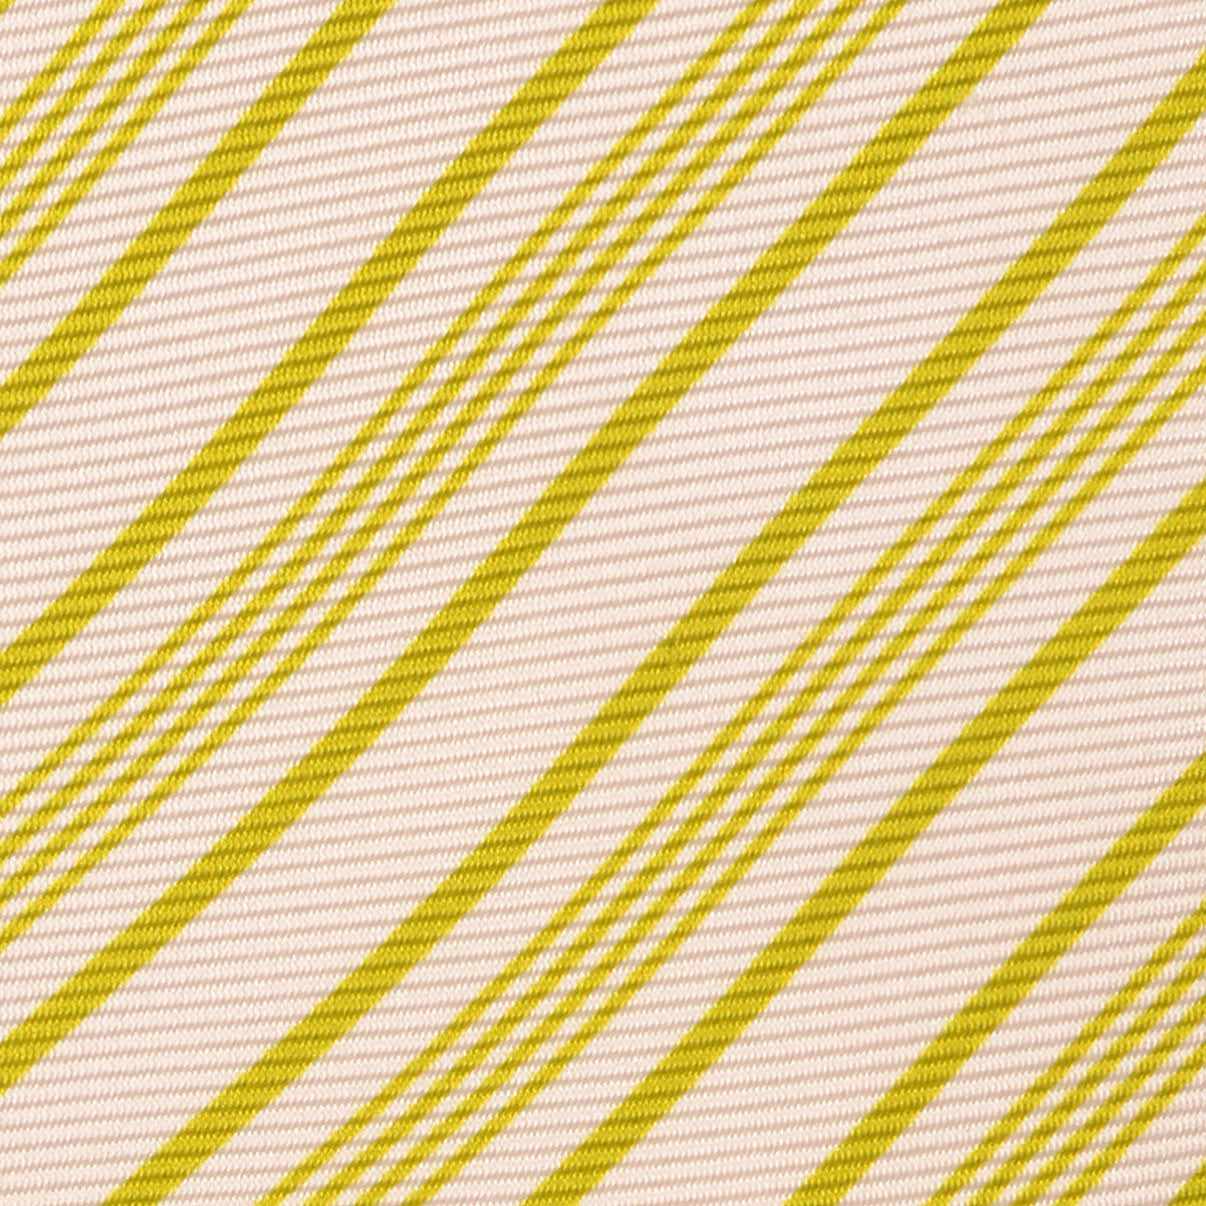 KITON Napoli Hand-Made Seven Fold White-Green Textured Striped Silk Tie NEW - SARTORIALE - 3